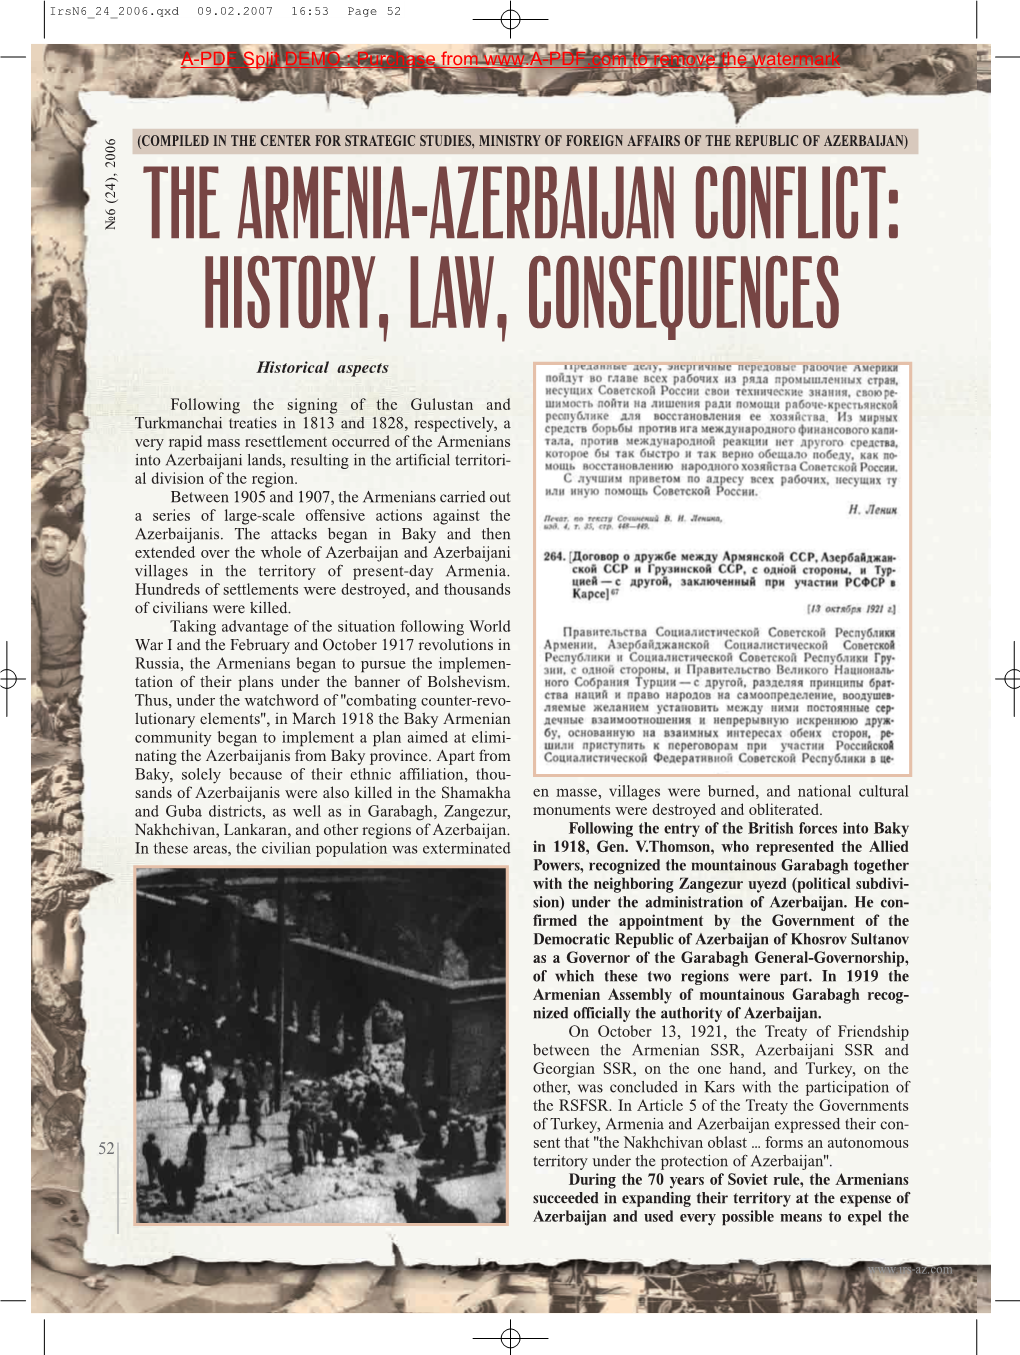 The Armenia Azerbaijan Conflict: History, Law